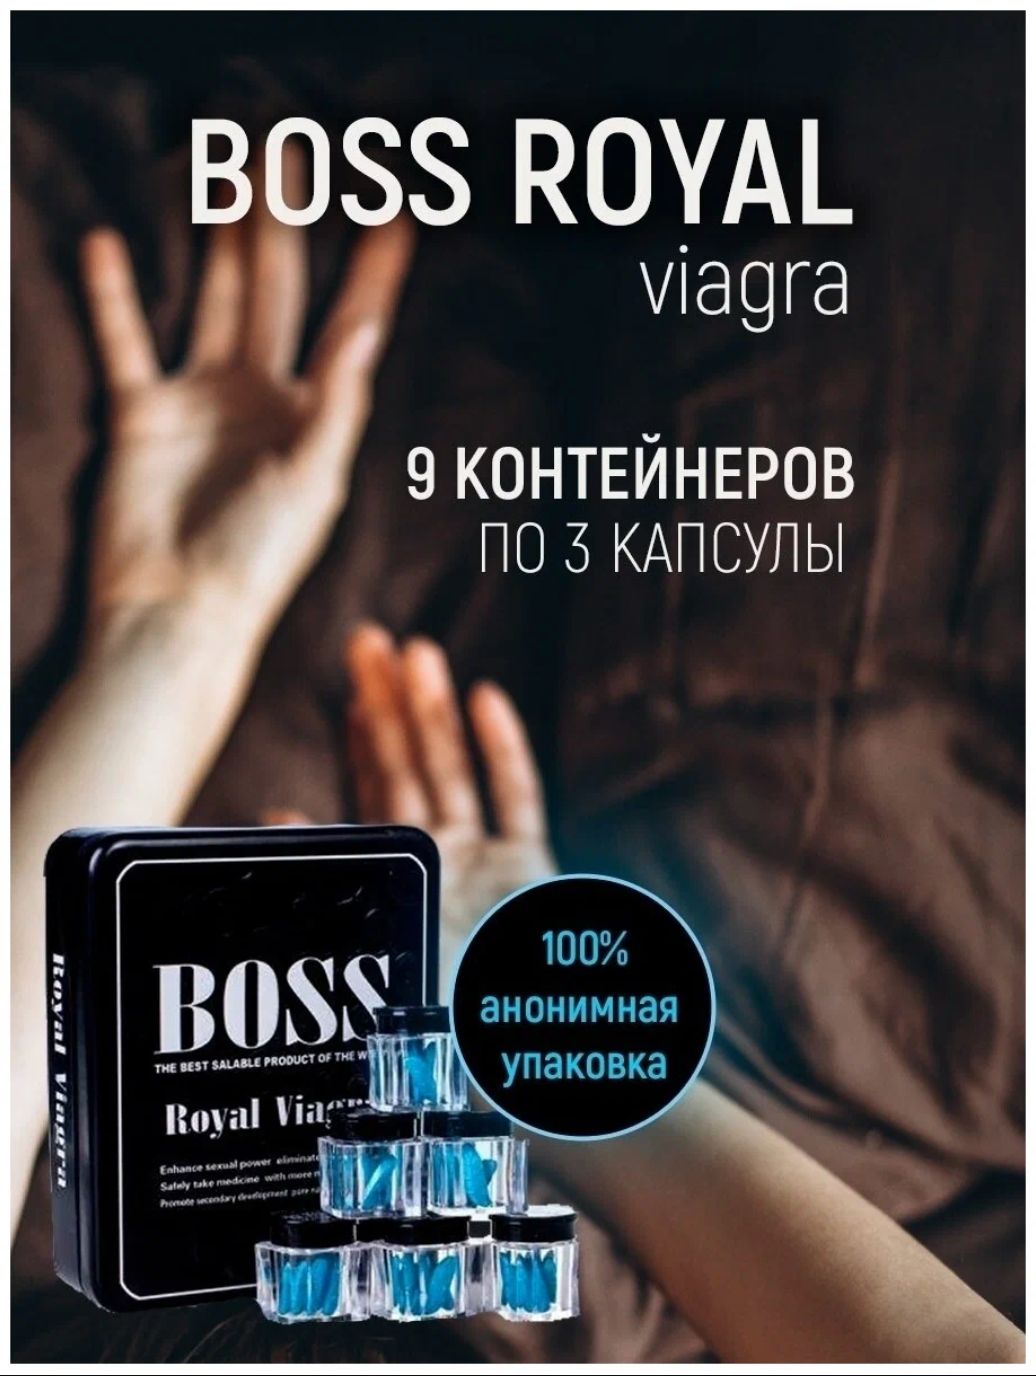 Boss royal босс роял. Boss Royal viagra для мужчин. Босс Роял виагра, Boss Royal viagra. Босс Роял виагра 27 капсул. Мужской возбудитель Boss Royal viagra 27.